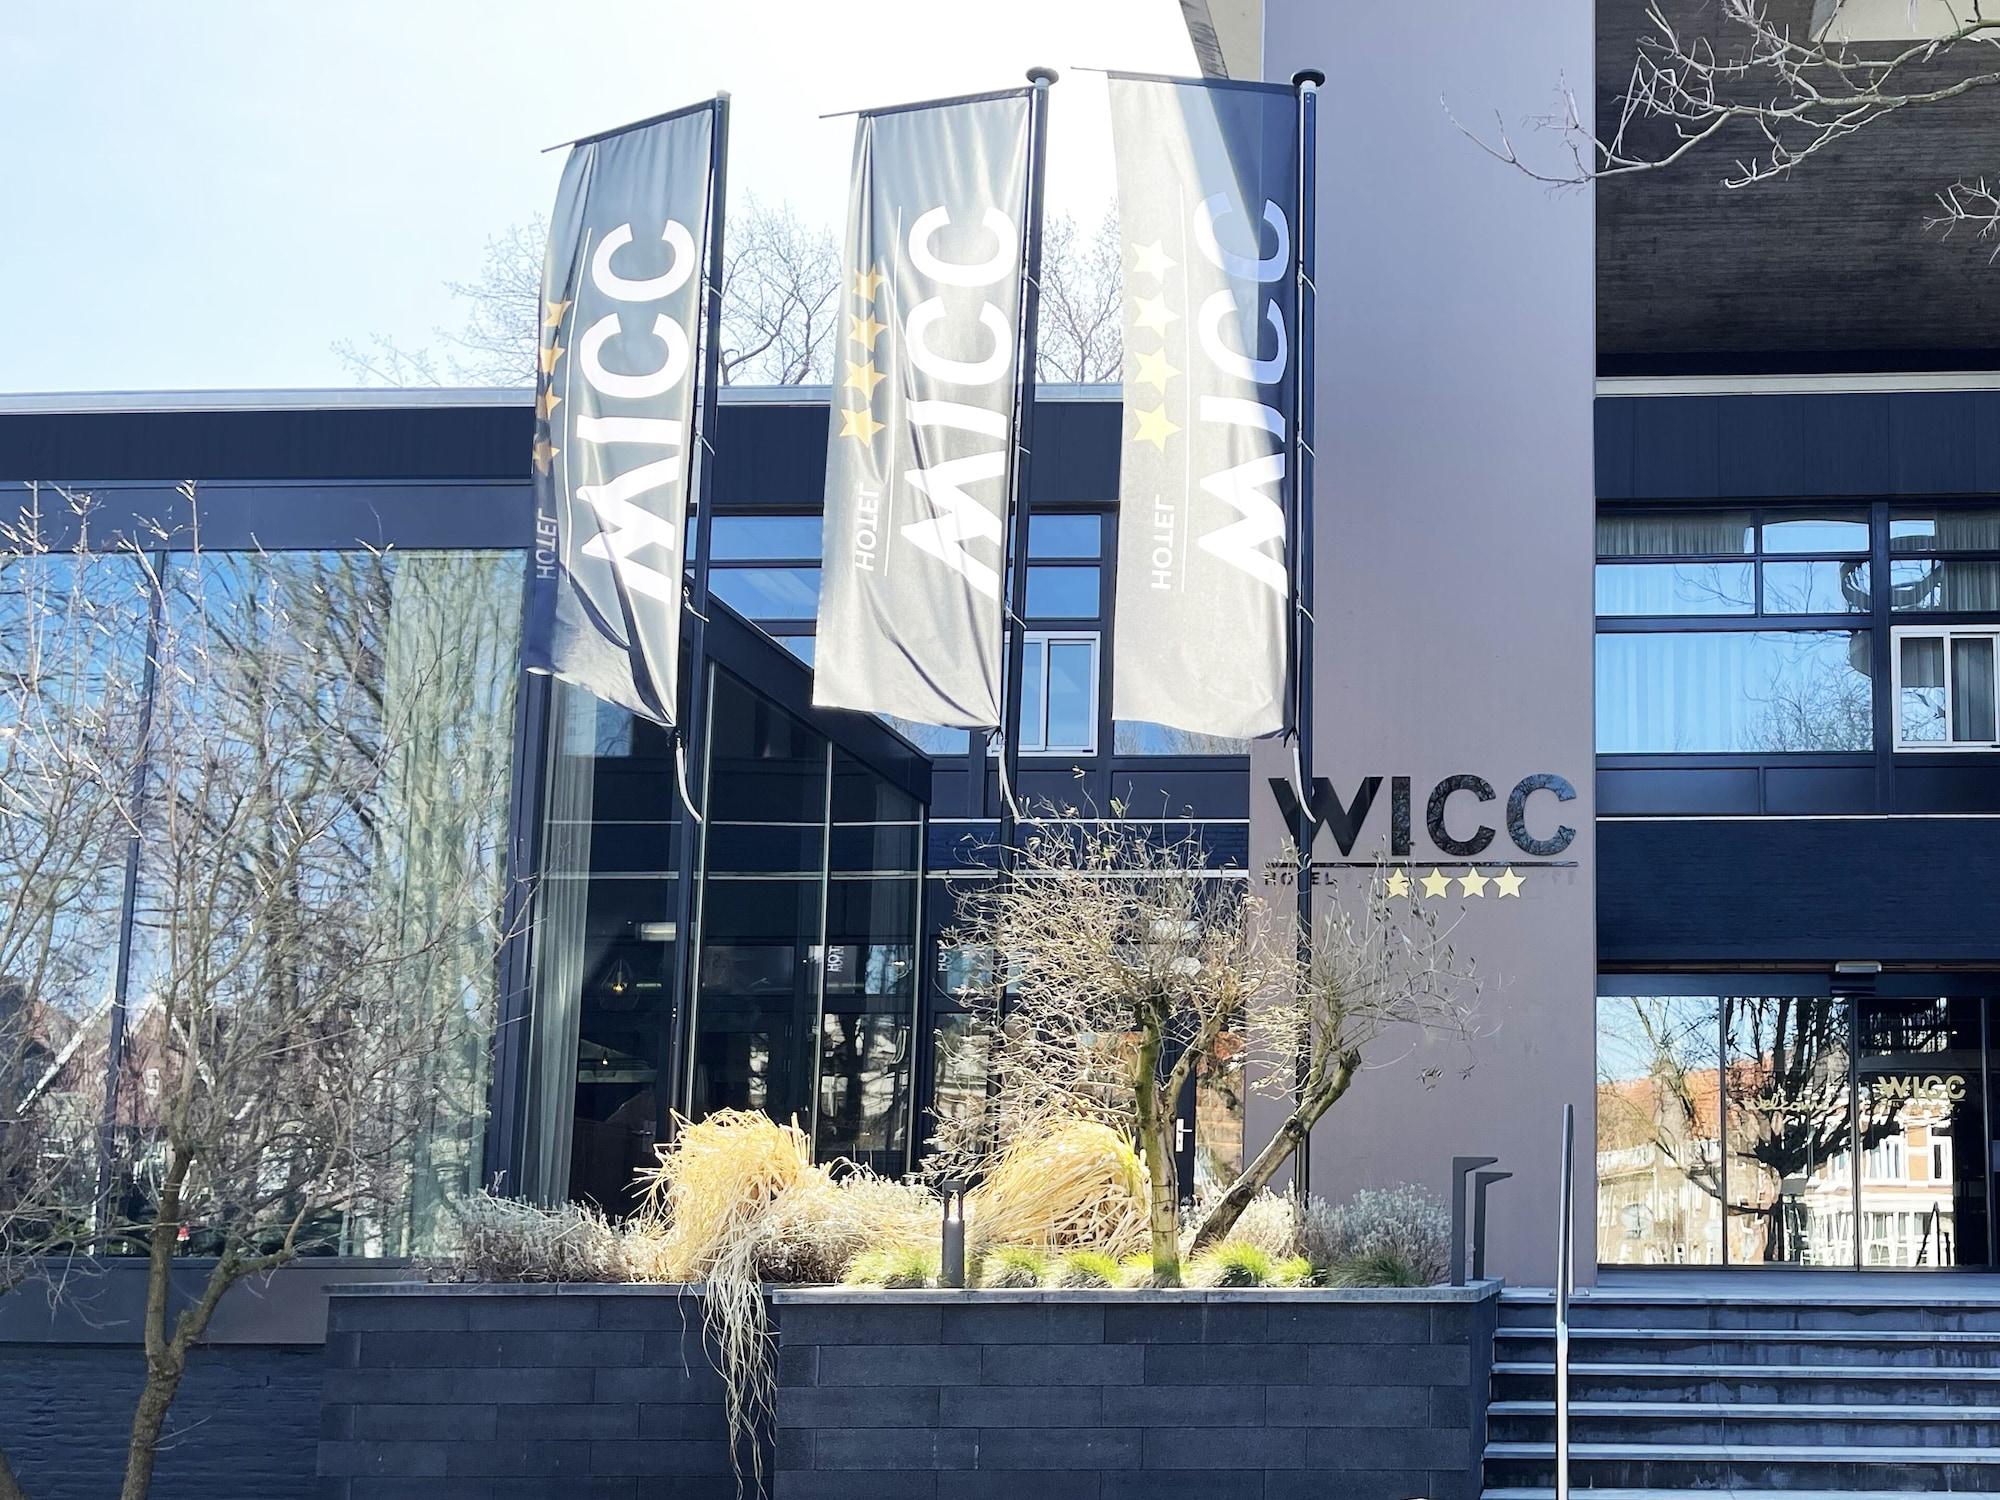 Wicc, Wageningen International Congress Centre B.V image